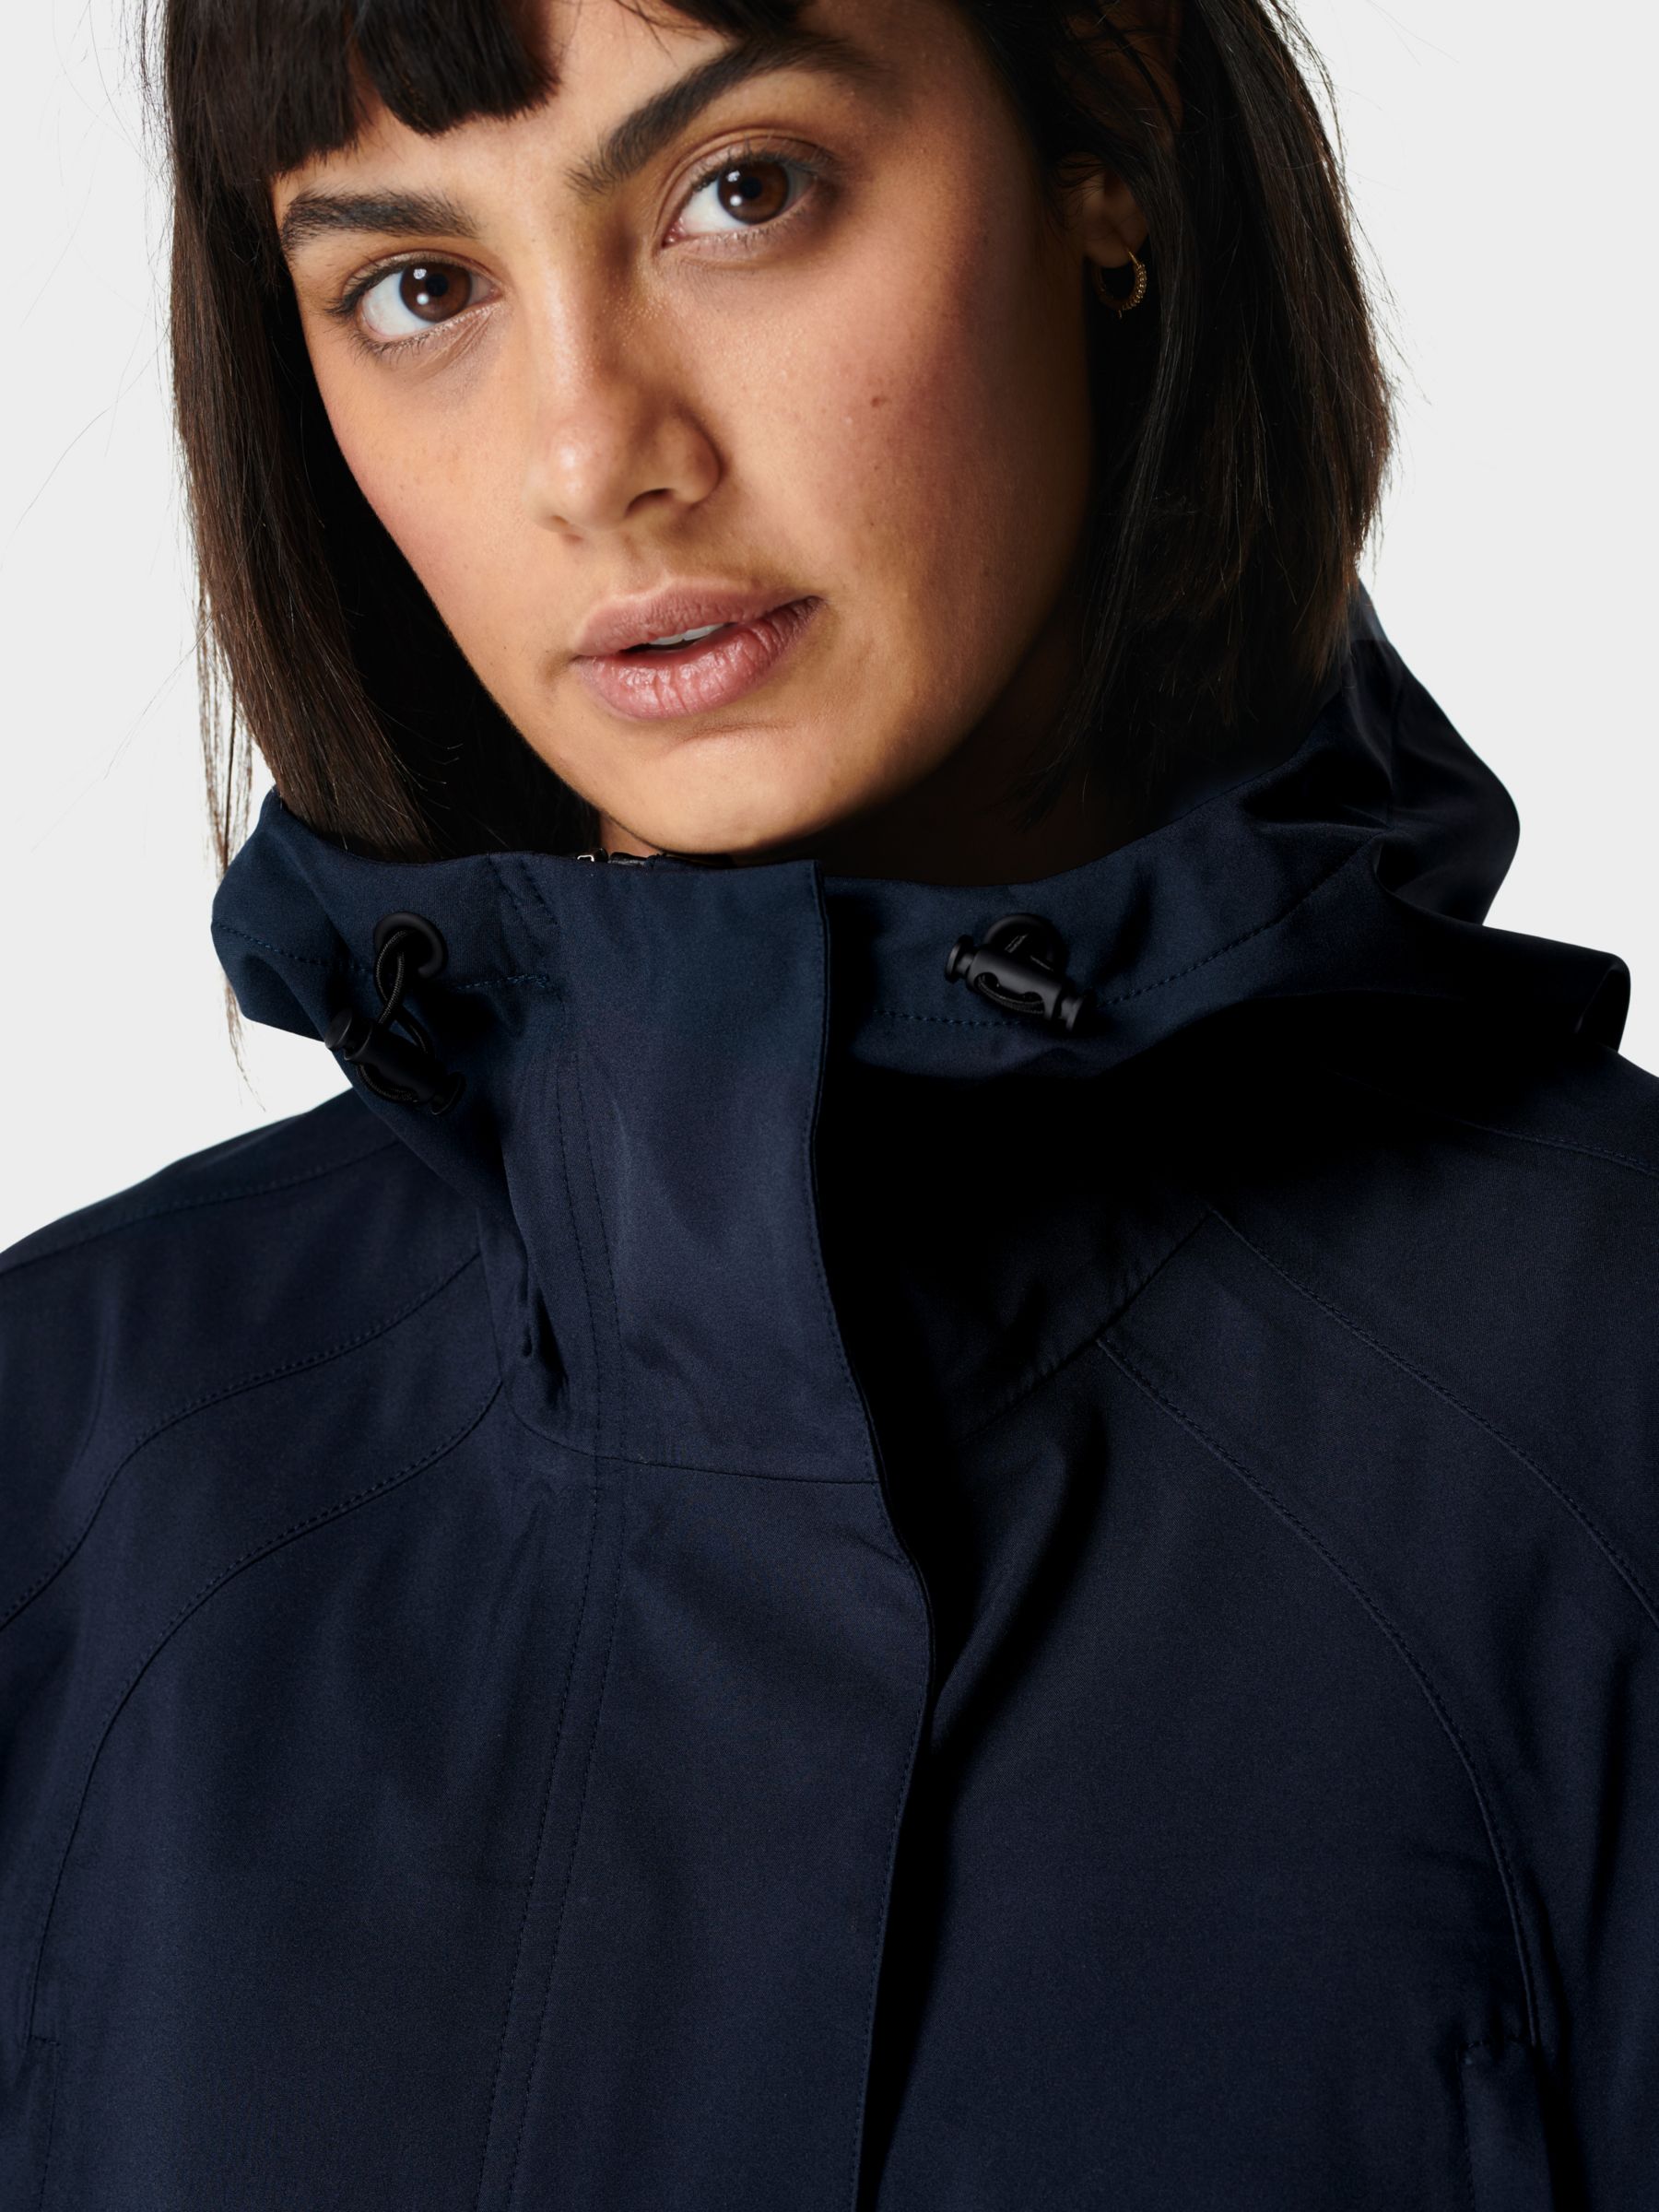 Mission Waterproof Jacket - navyblue, Women's Jackets + Coats